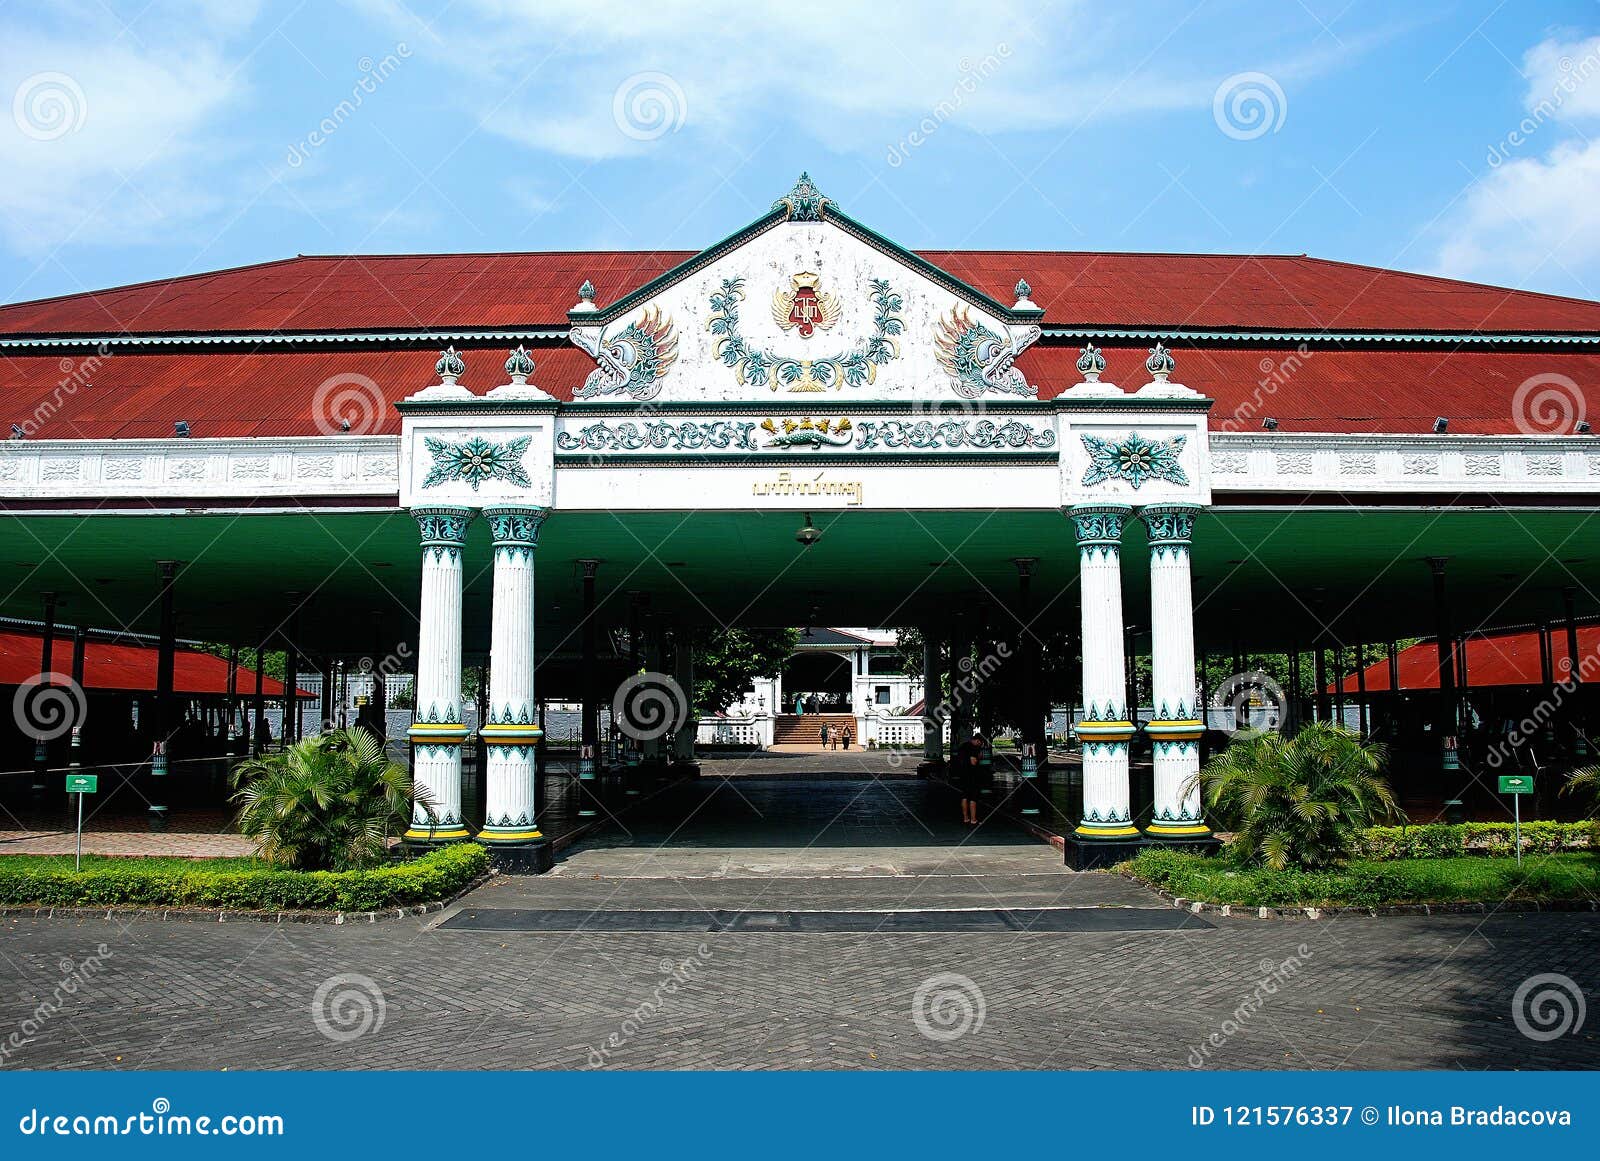 Kraton Sultan  Palace Of Yogyakarta  Stock Image Image of 